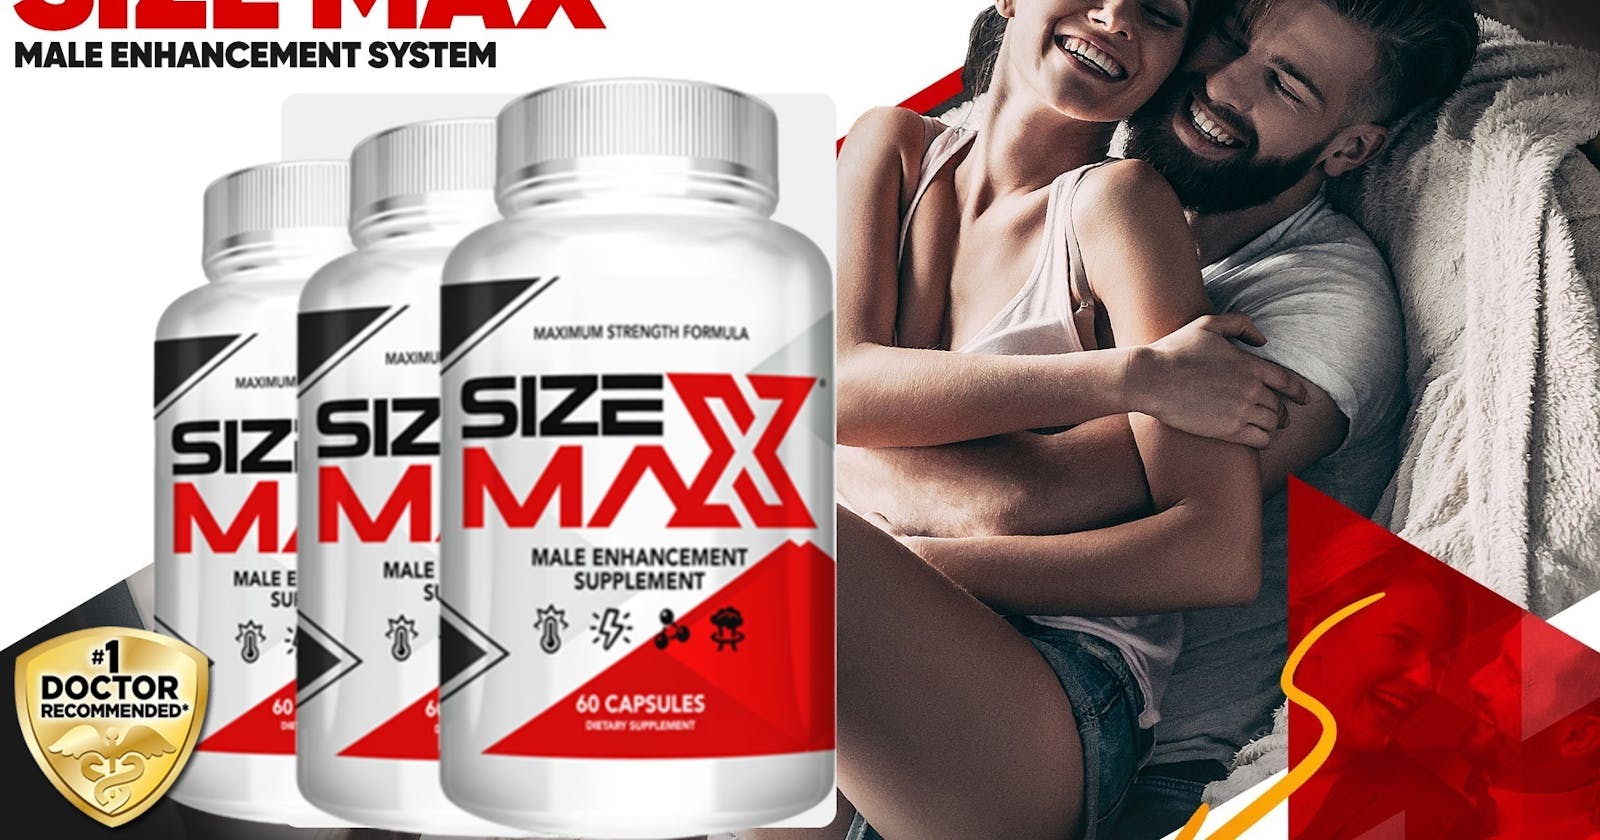 Size Max Male Enhancement Supplement: Reviews and Complaints